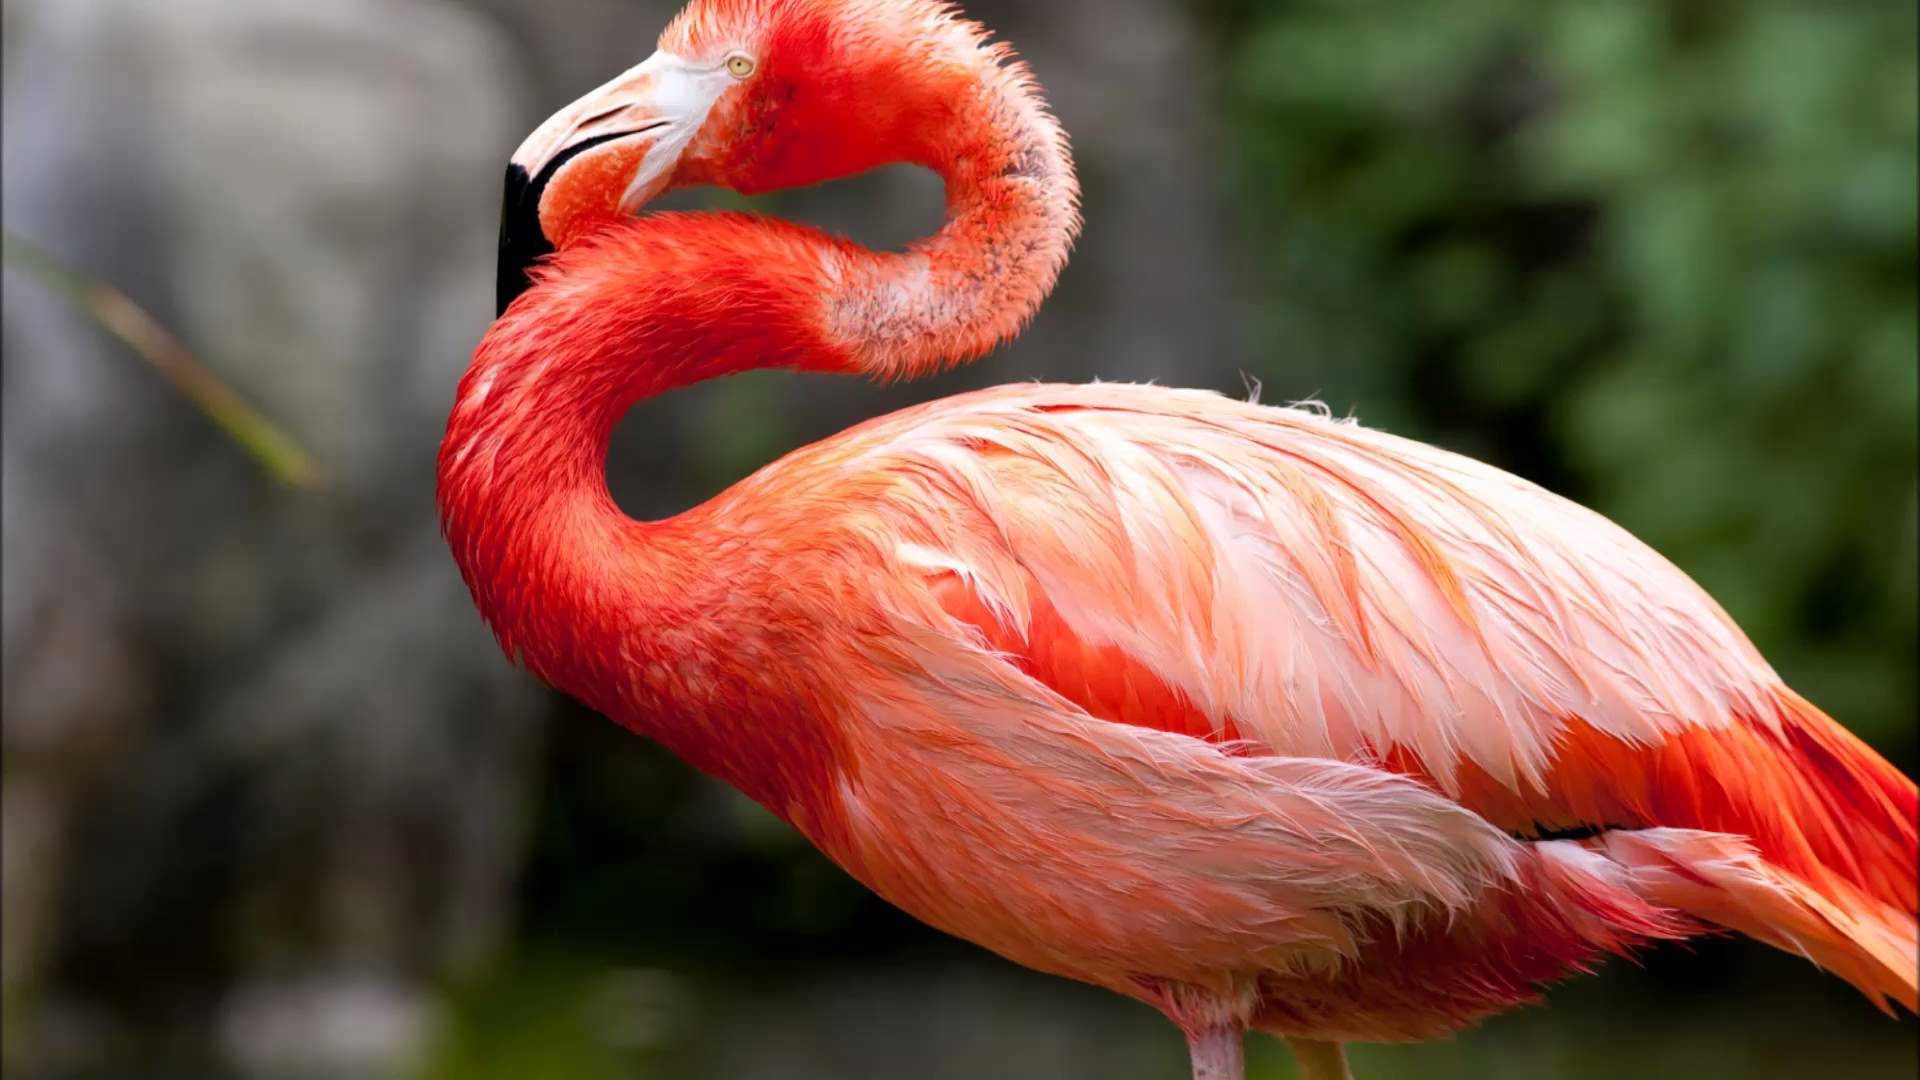 flamingo bird sounds - YouTube